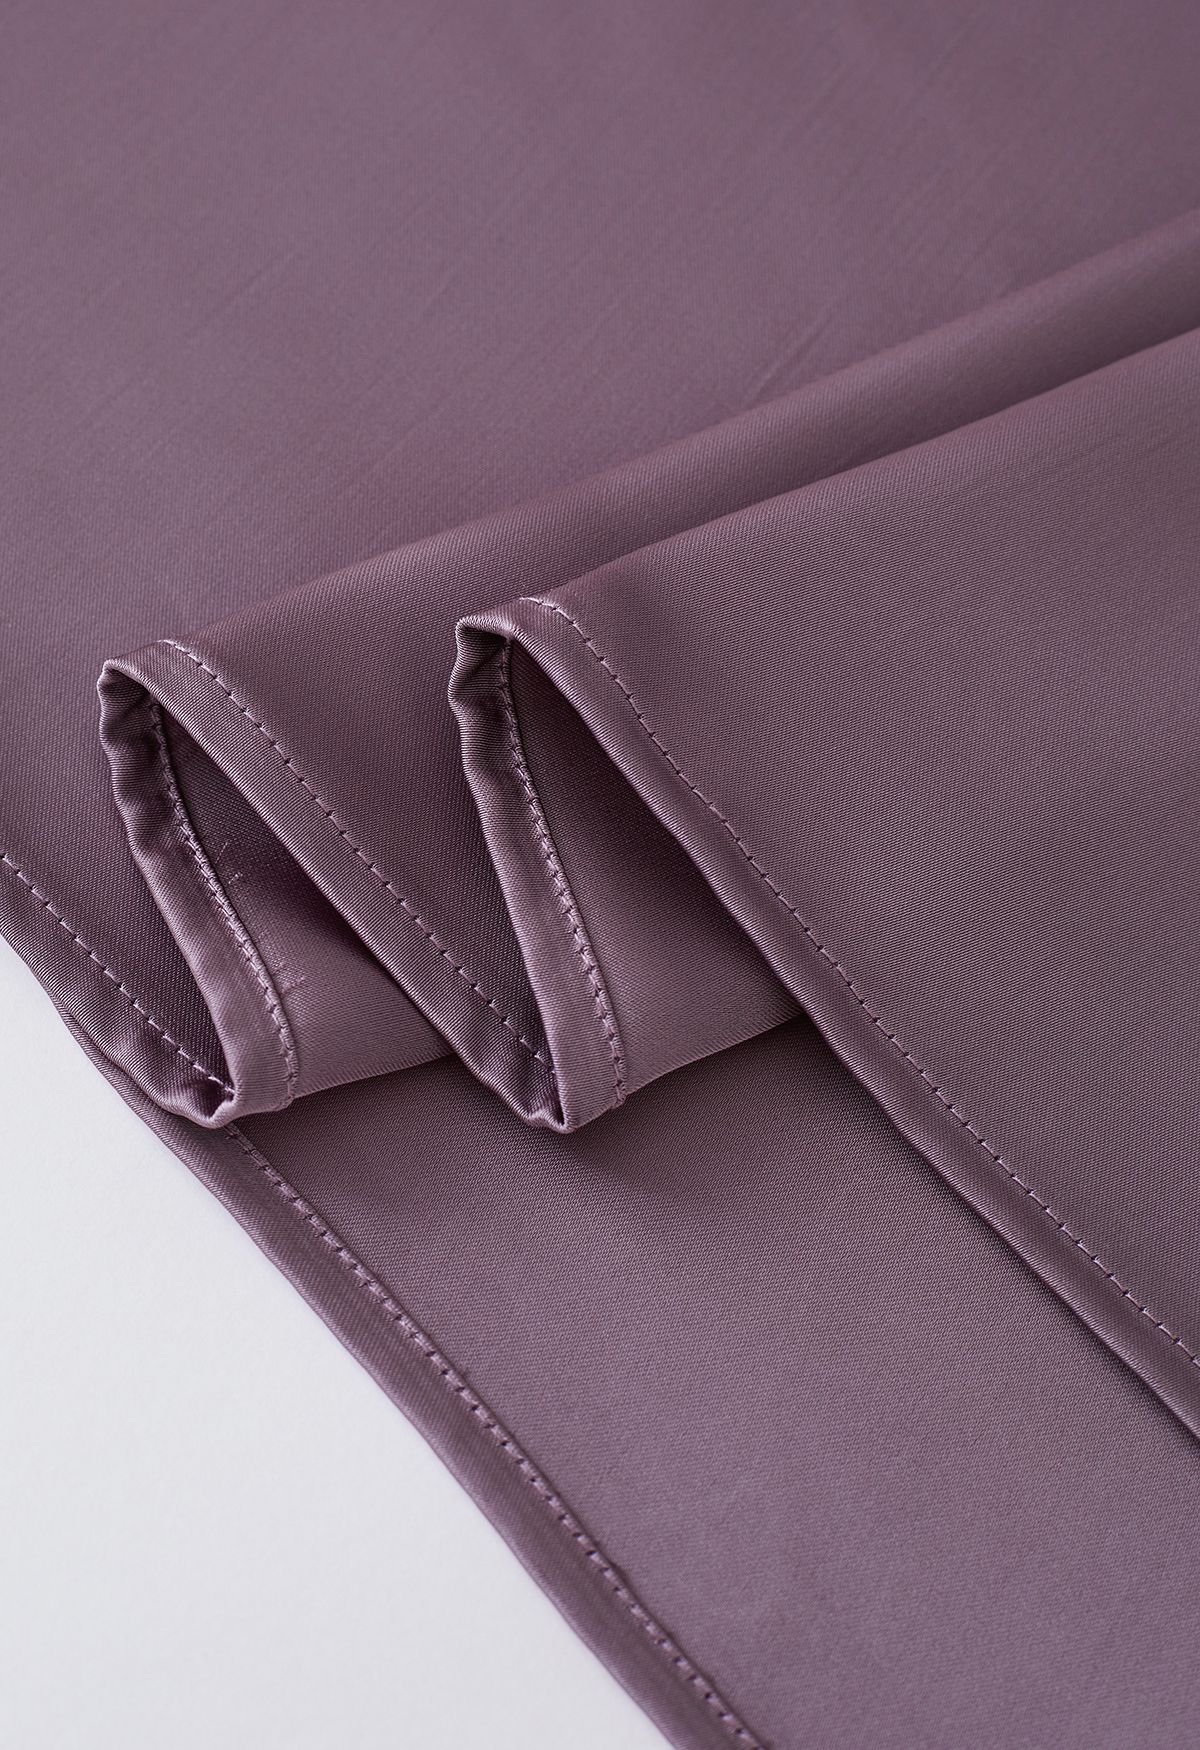 Elastic Drawstring Waist Satin Maxi Skirt in Purple